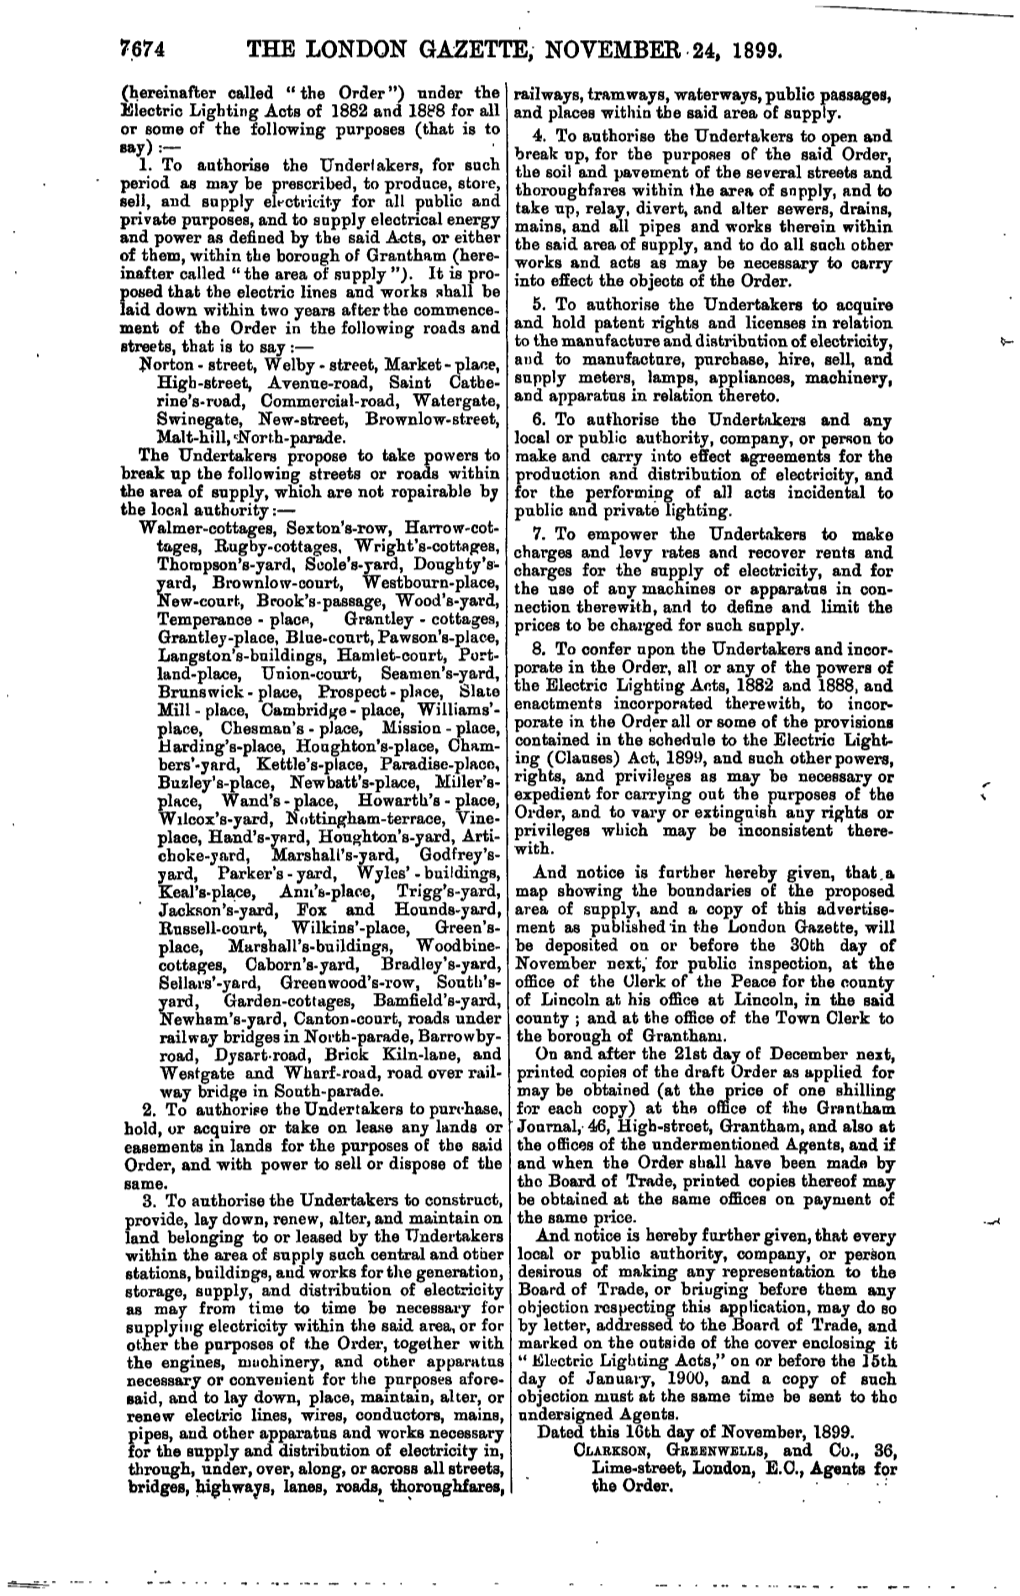 7674 the London Gazette, November 24, 1899